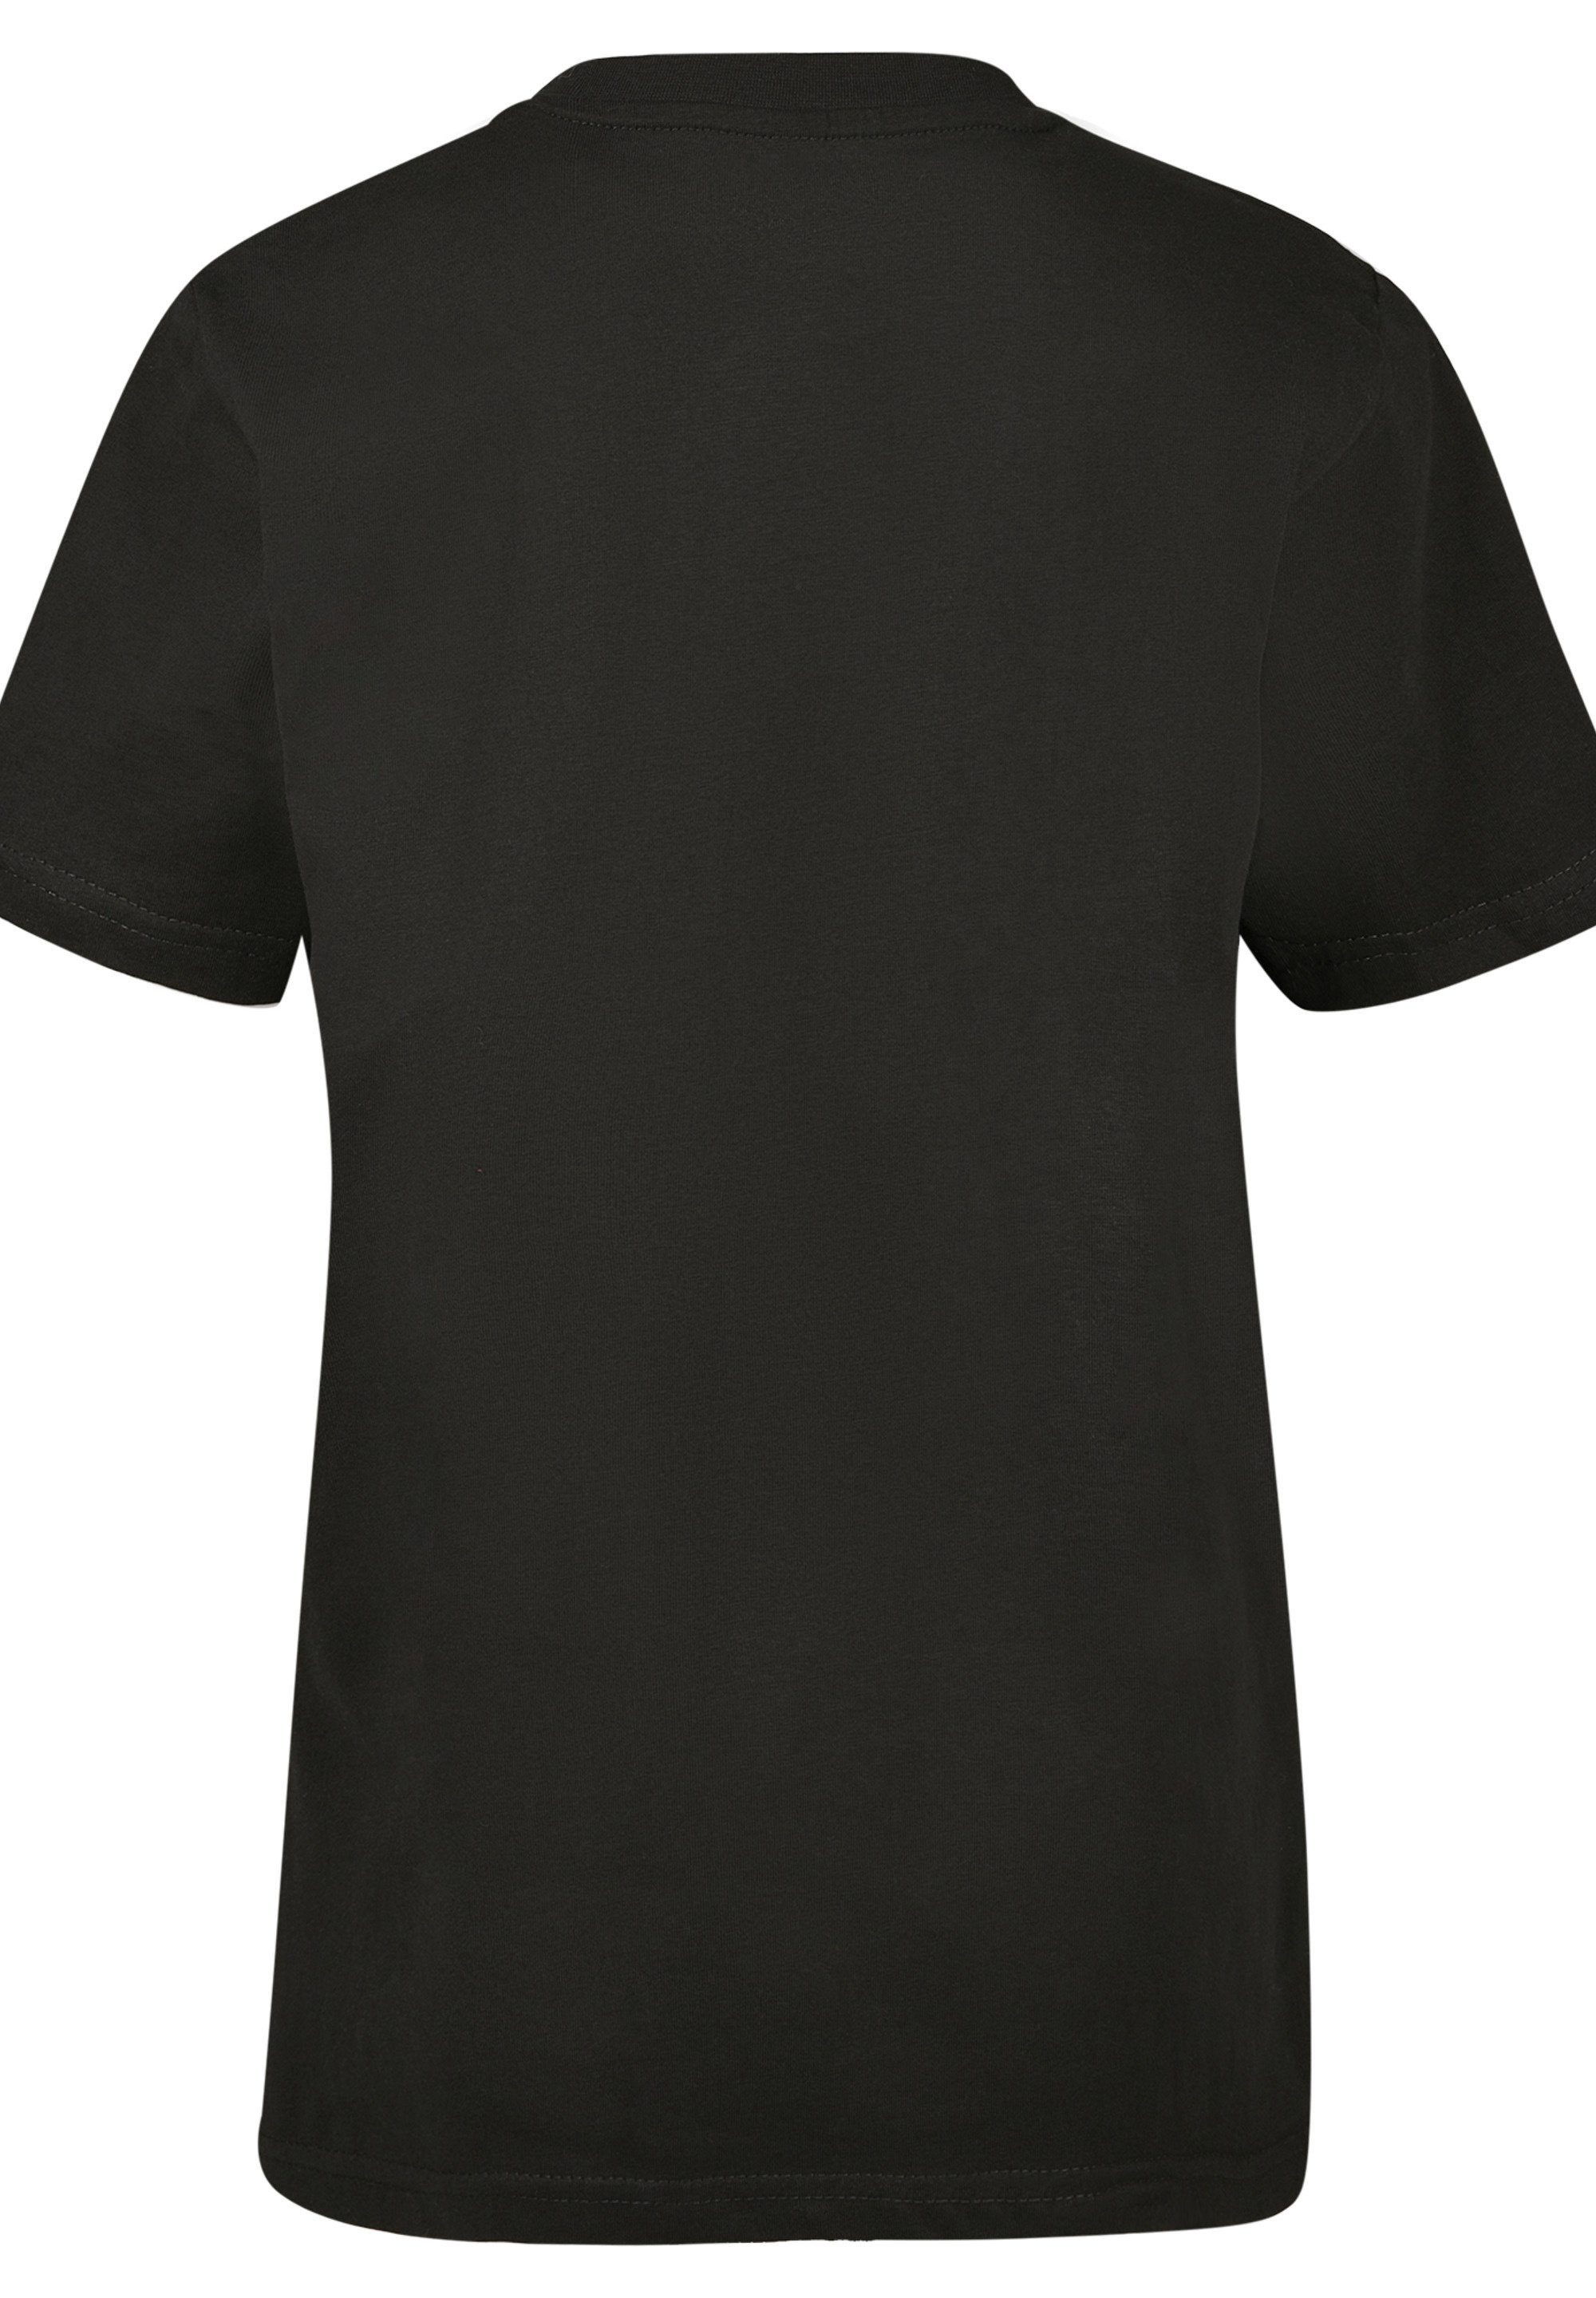 F4NT4STIC First Print America Captain T-Shirt The schwarz Avenger